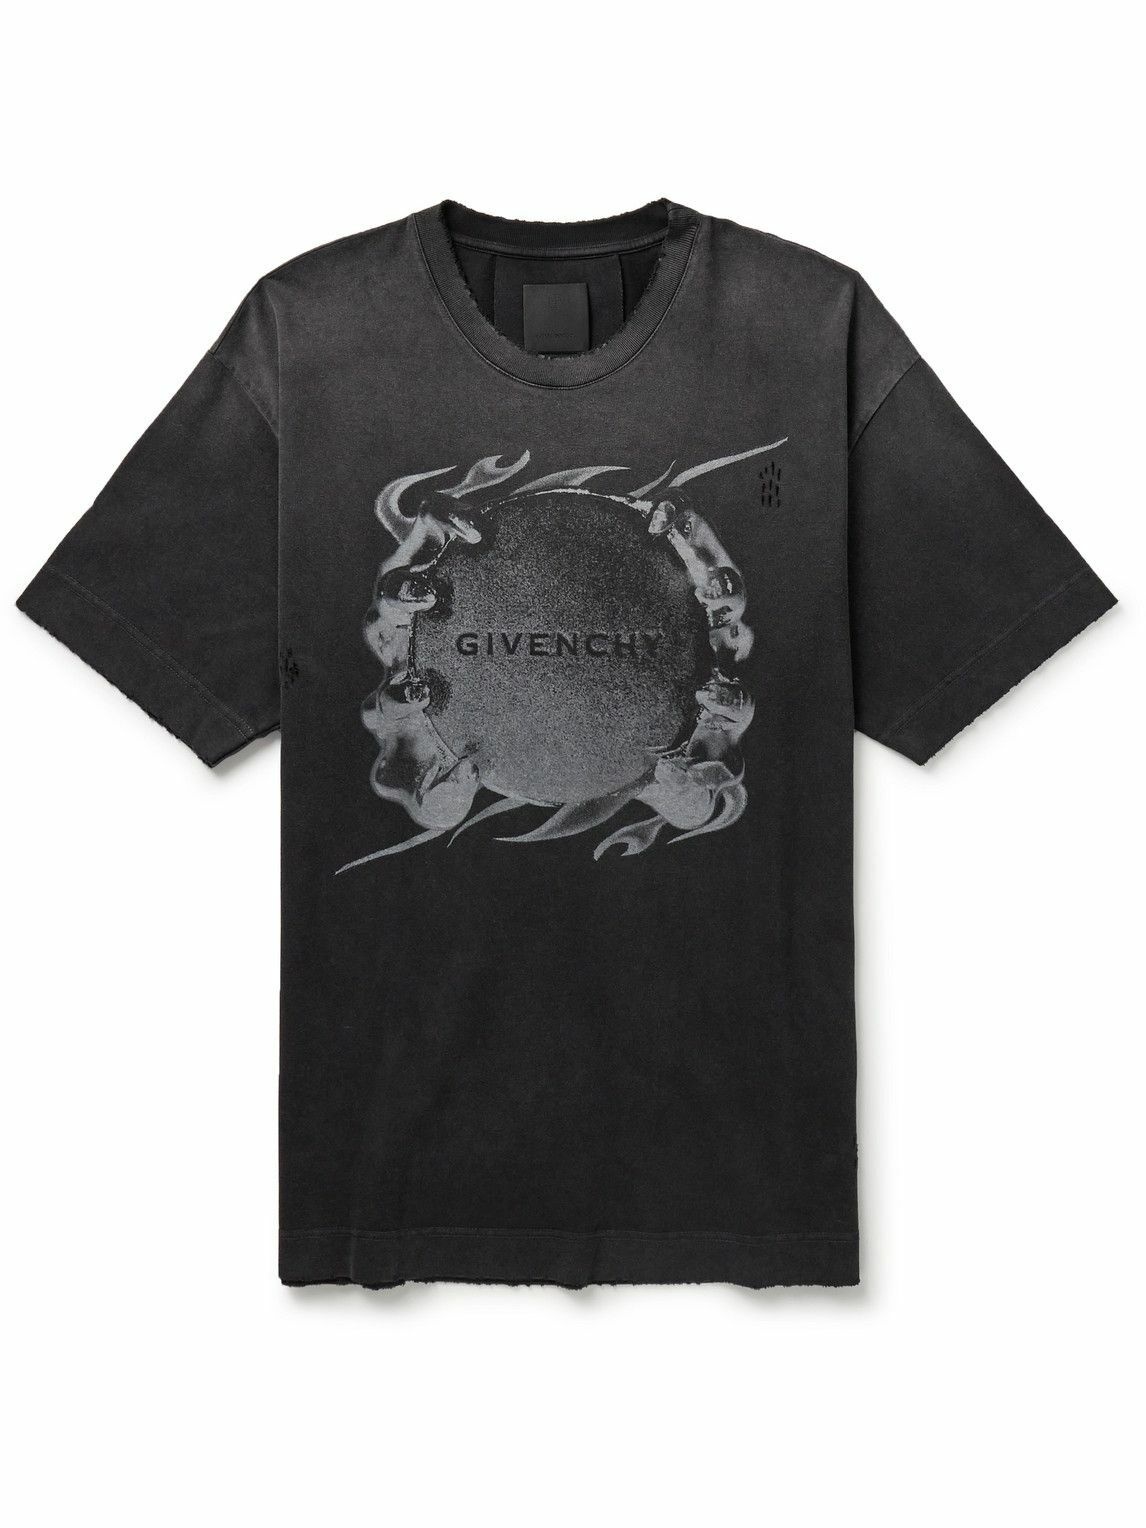 Yoshi-P's LL shirt (givenchy paris logo-print eyelet-detailing) : r/ffxiv